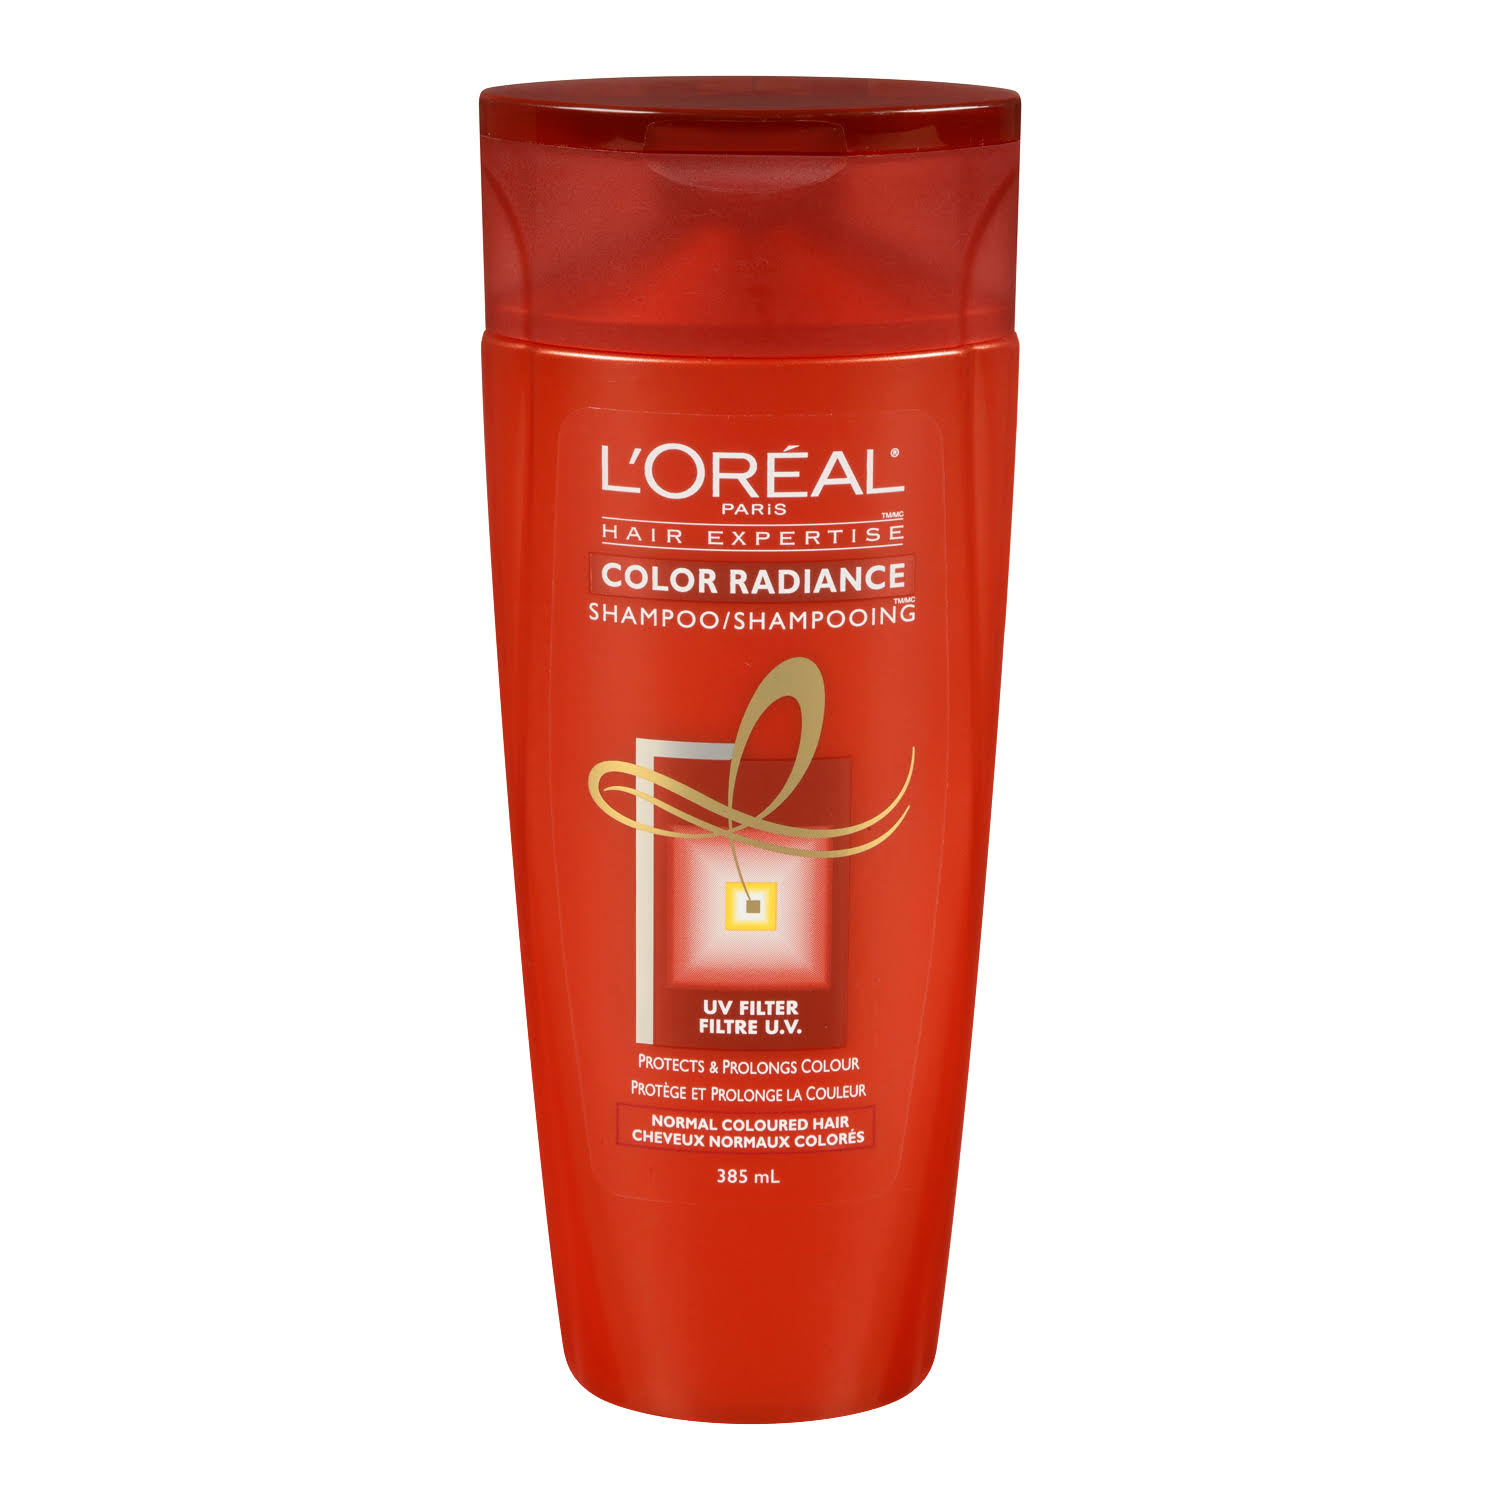 Loreal Paris Hair Expertise Color Radiance Shampoo 385ml